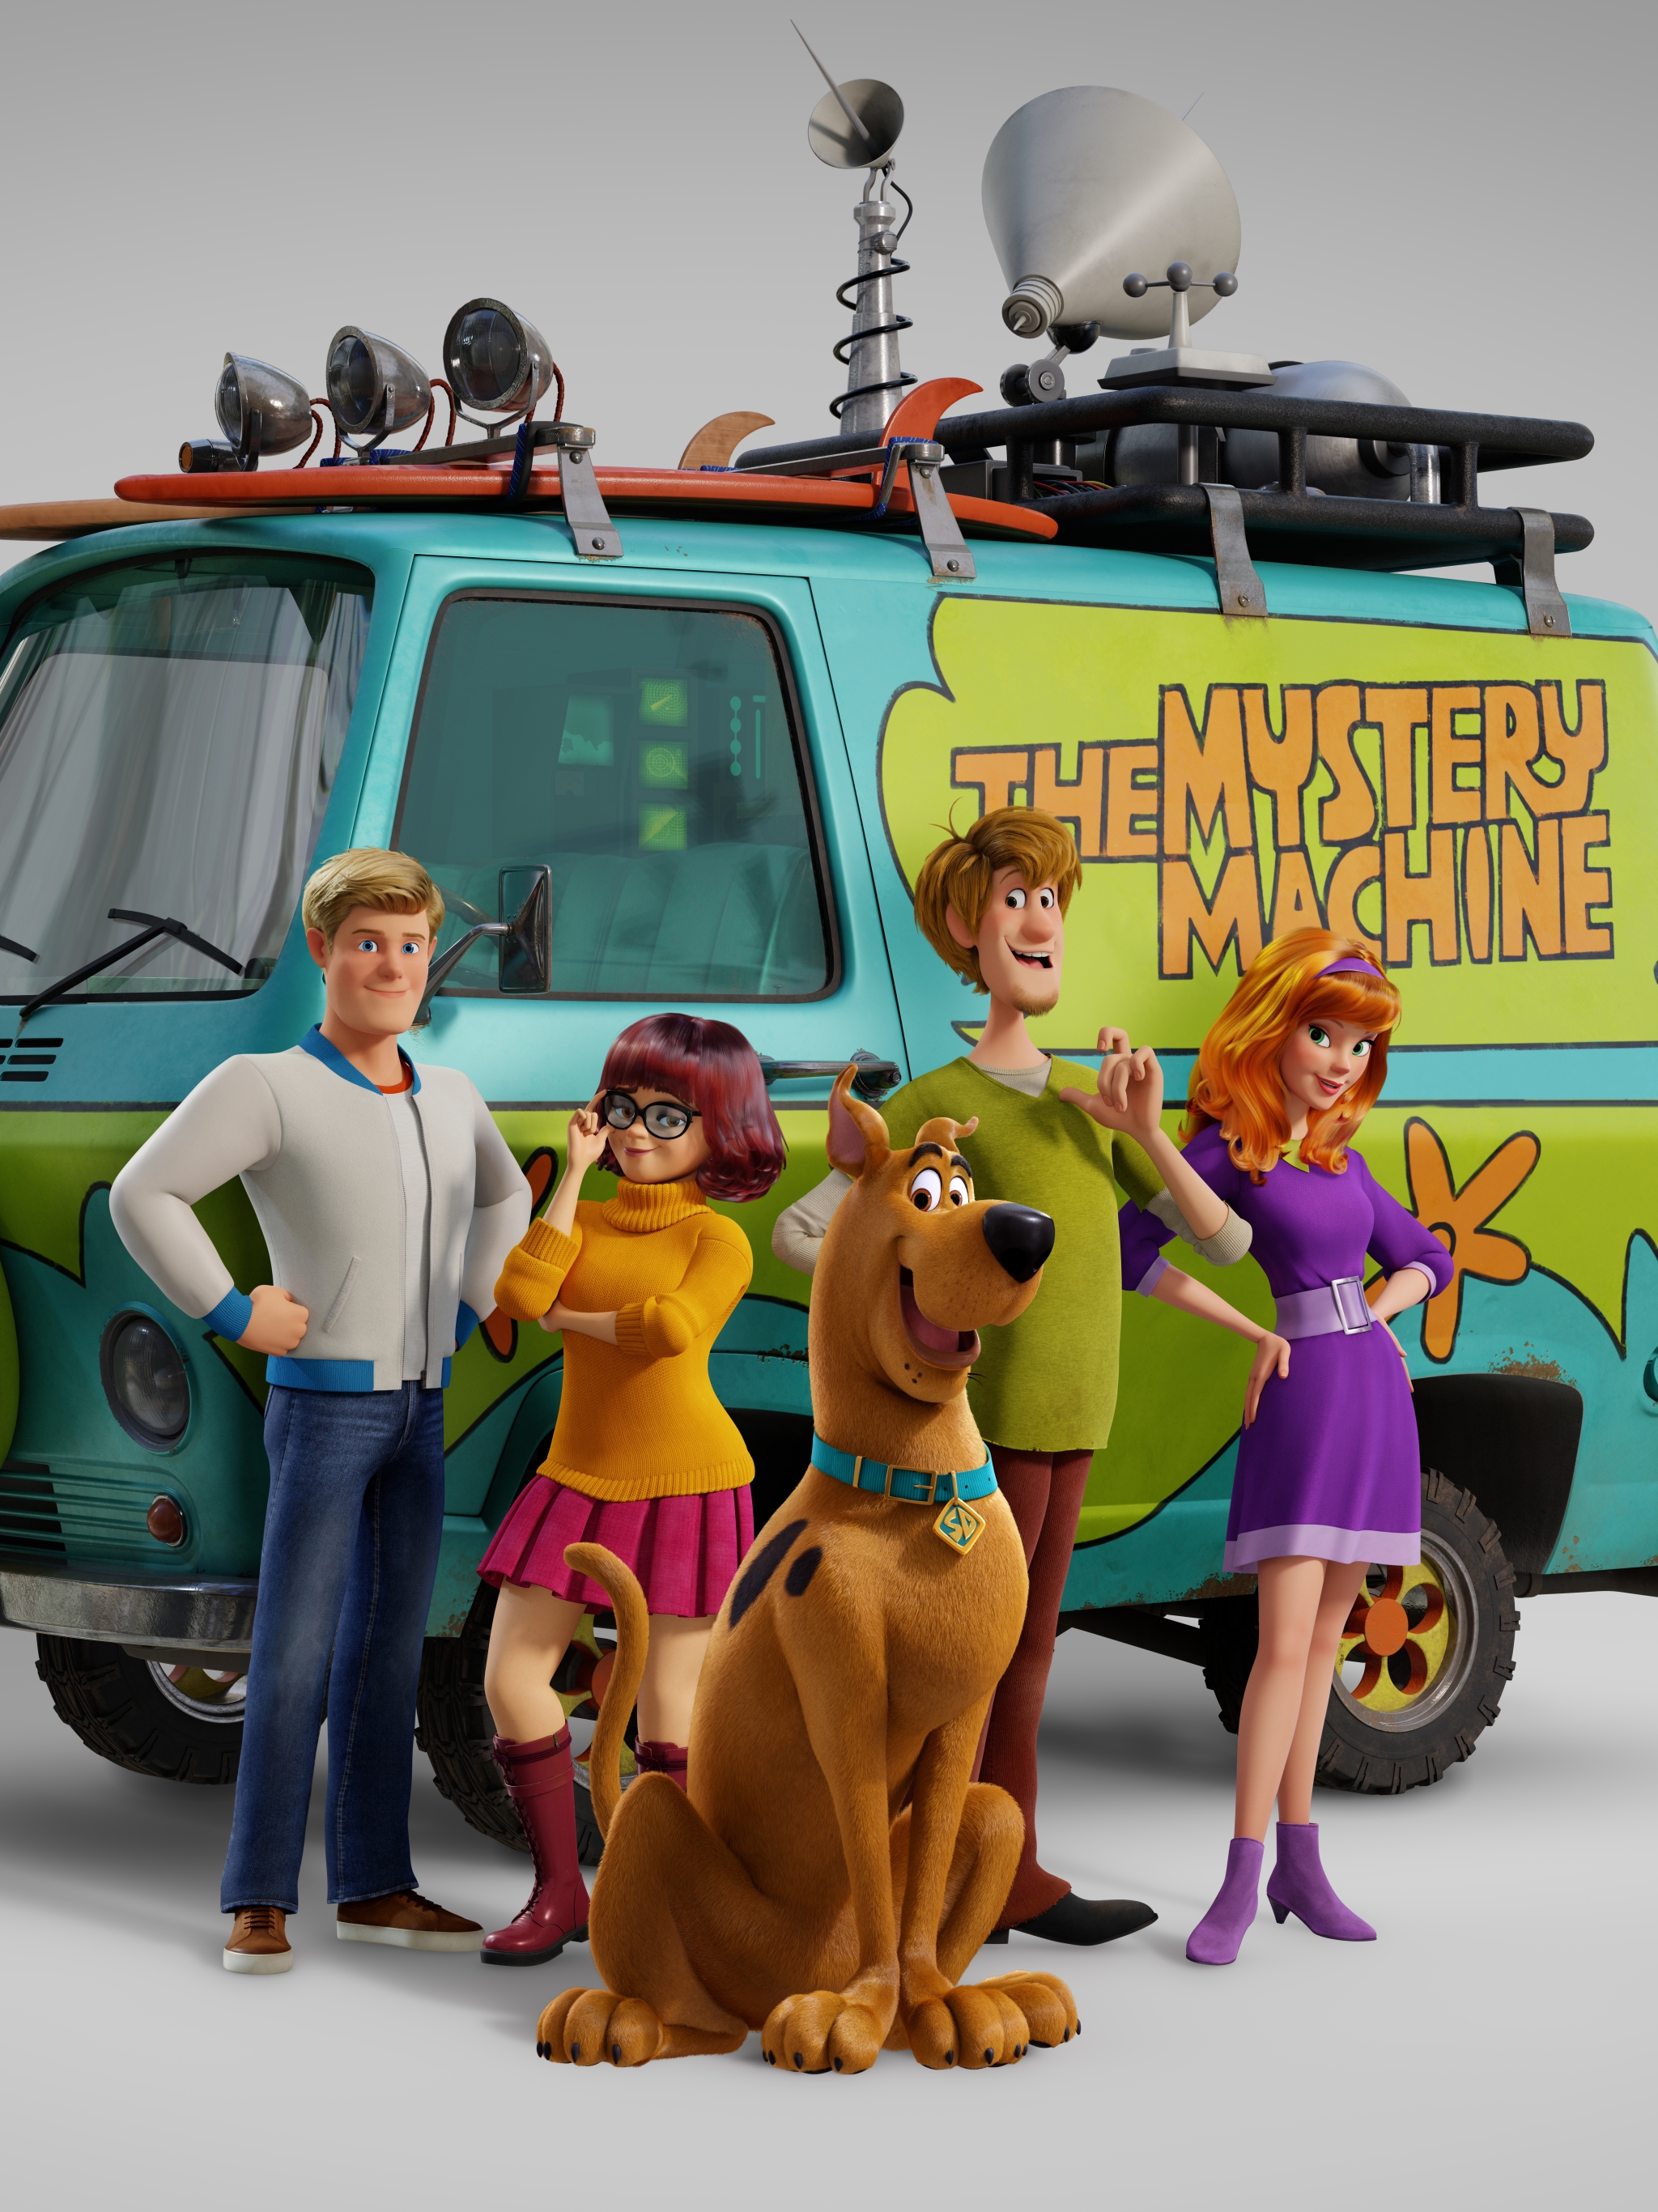 Handy-Wallpaper Filme, Scooby Doo, Daphne Blake, Fred Jones, Shaggy Rogers, Velma Dinkley, Scooby! Voll Verwedelt kostenlos herunterladen.